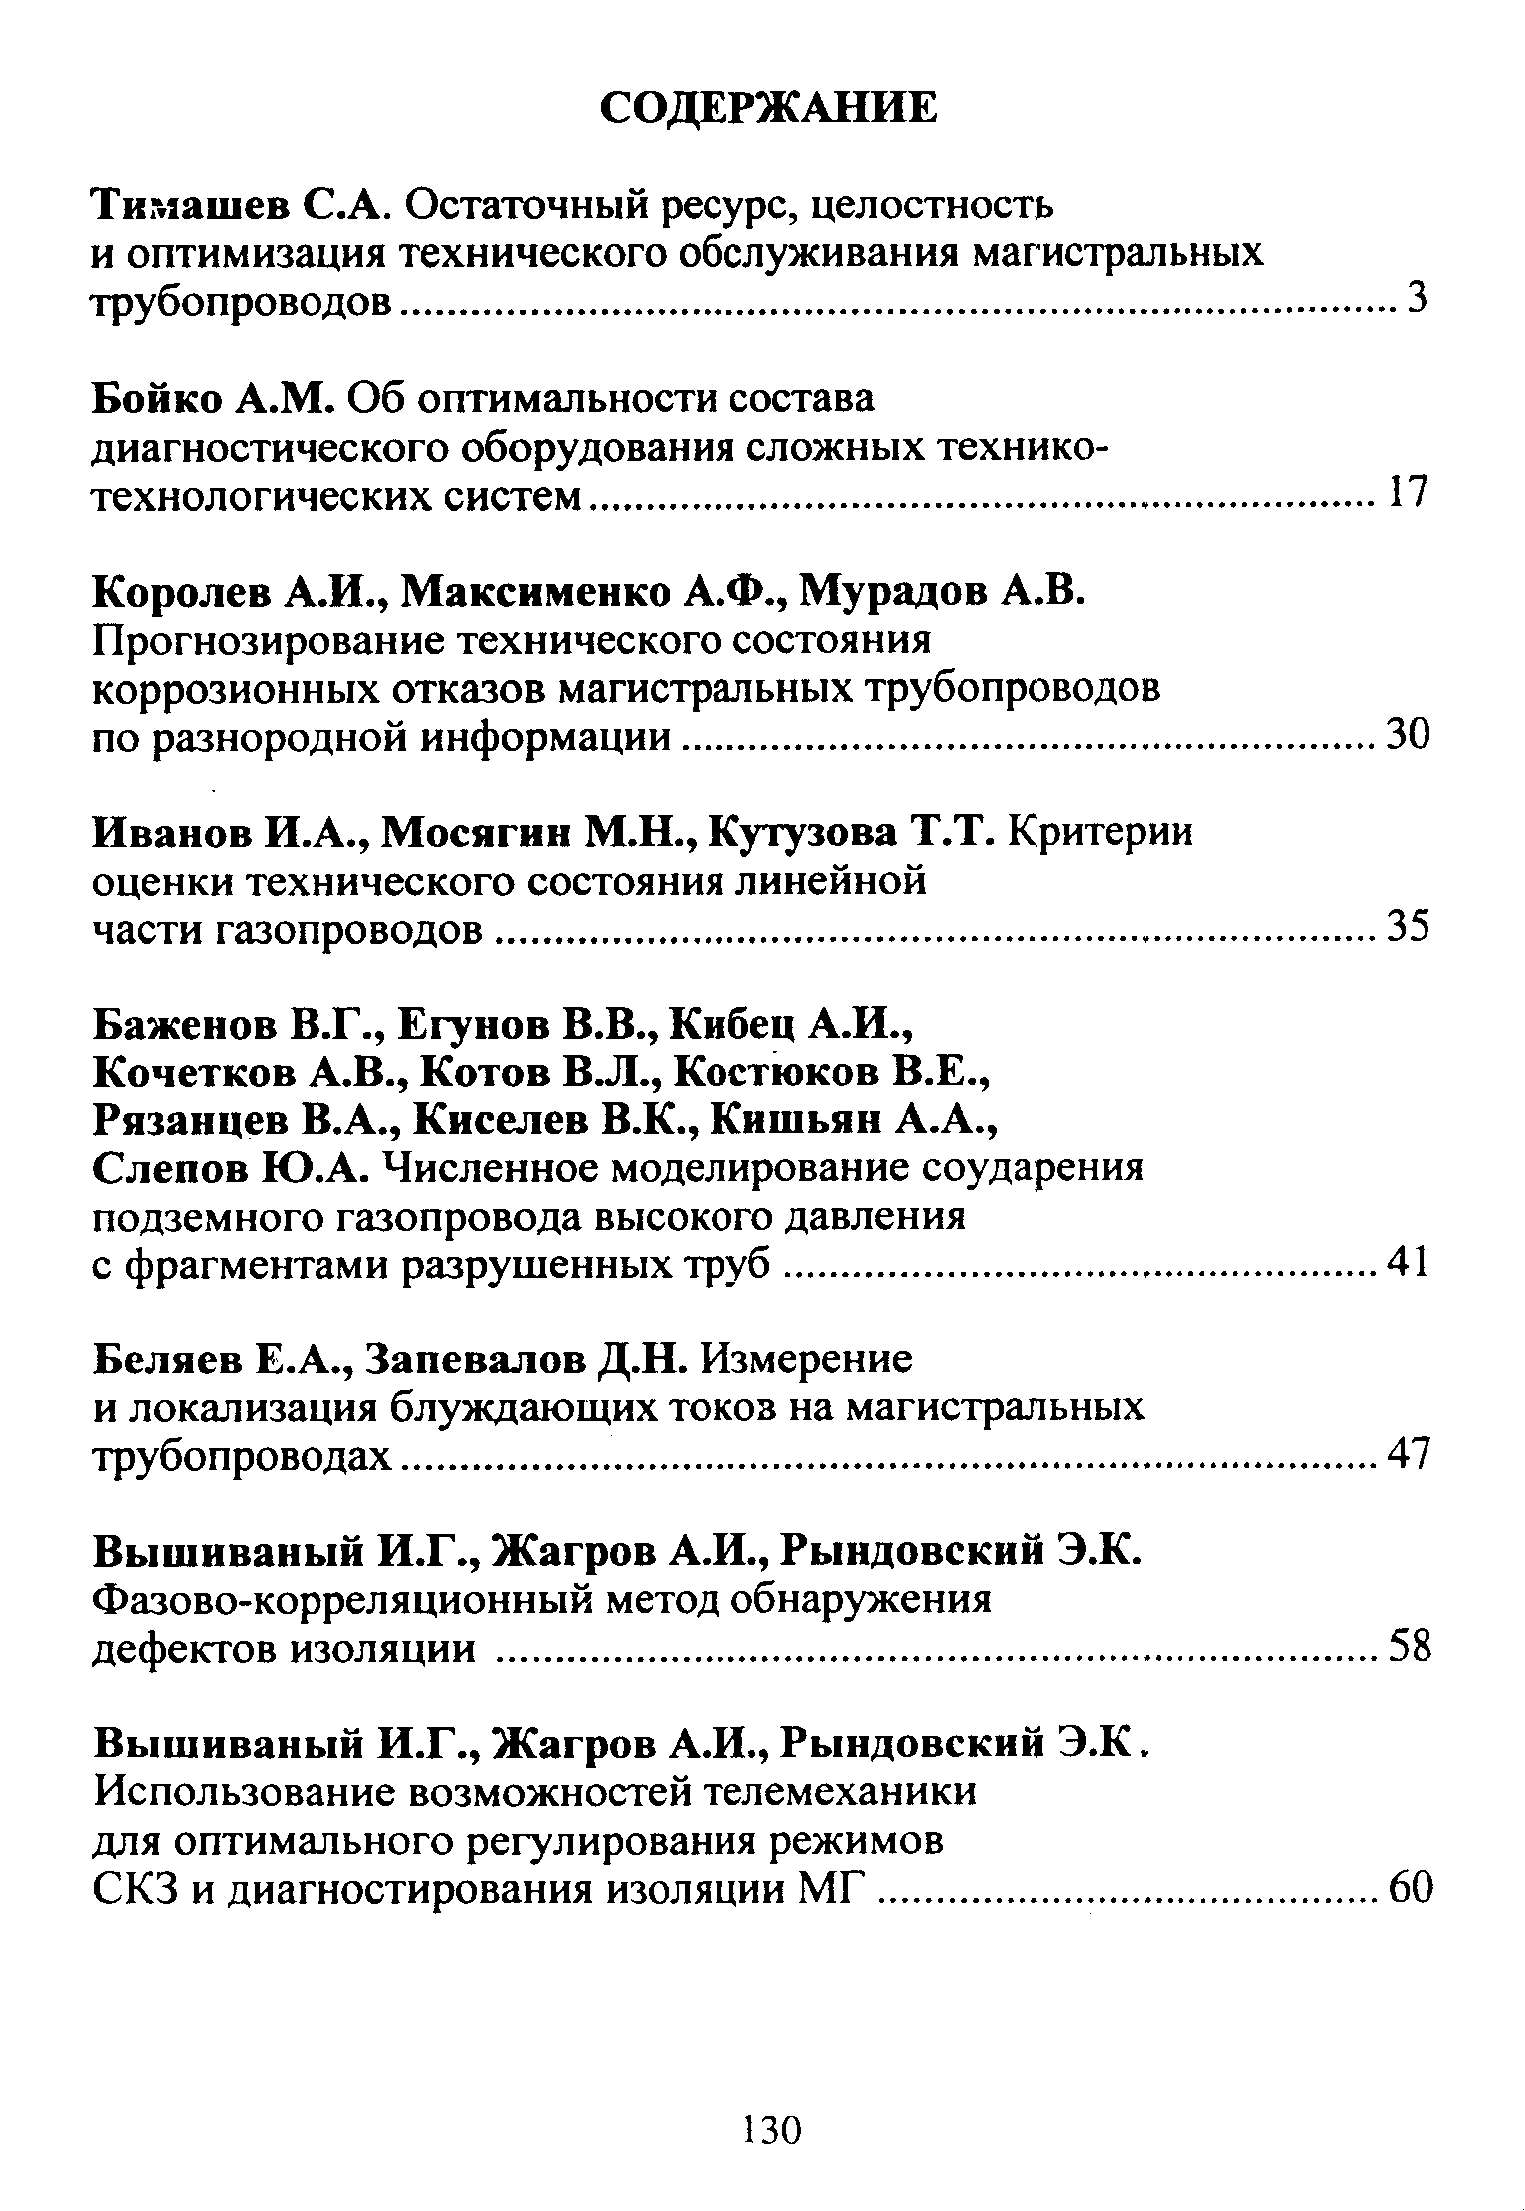 Королев А.И., Максименко А.Ф., Мурадов A.B.
